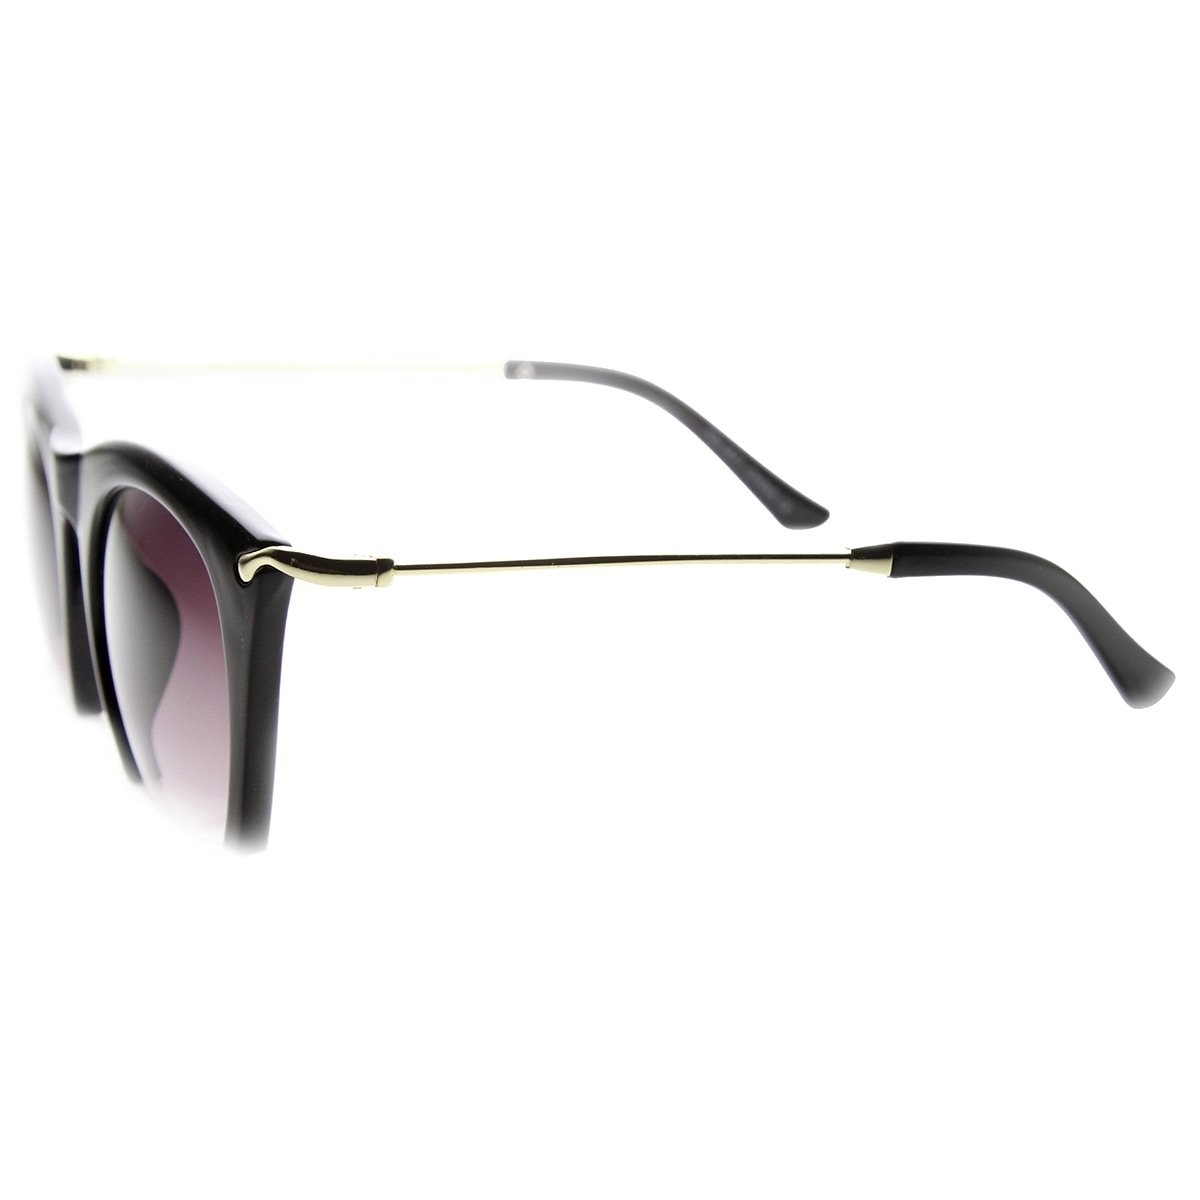 Womens Cateye High Fashion Semi-Rimless Metal Arms Sunglasses - Black Lavender